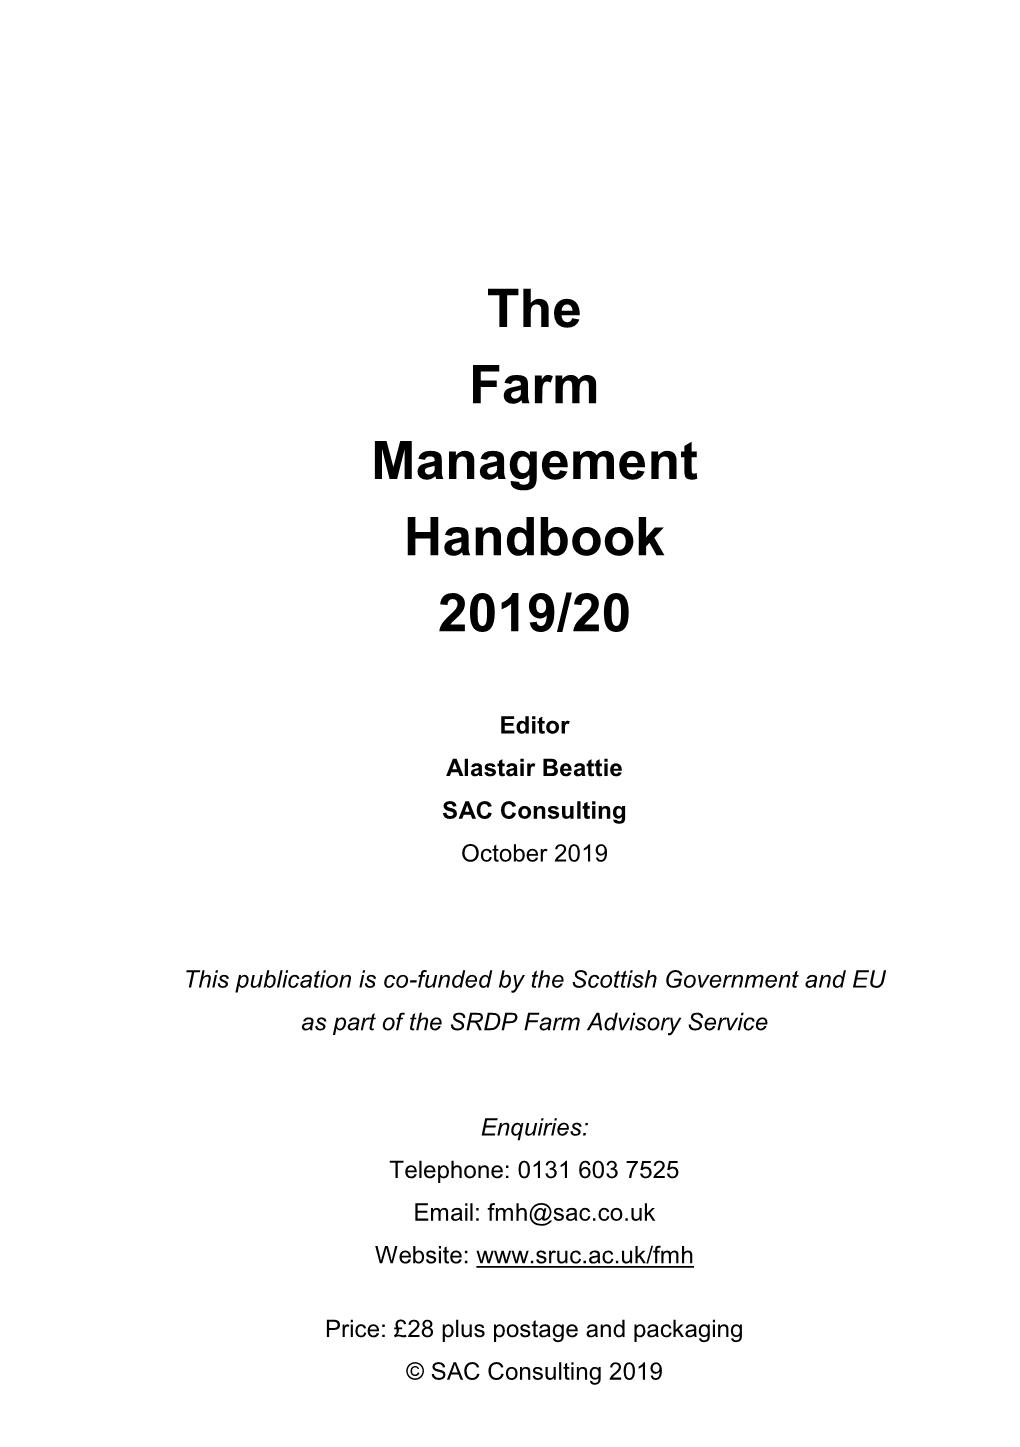 Farm Management Handbook 2019/20